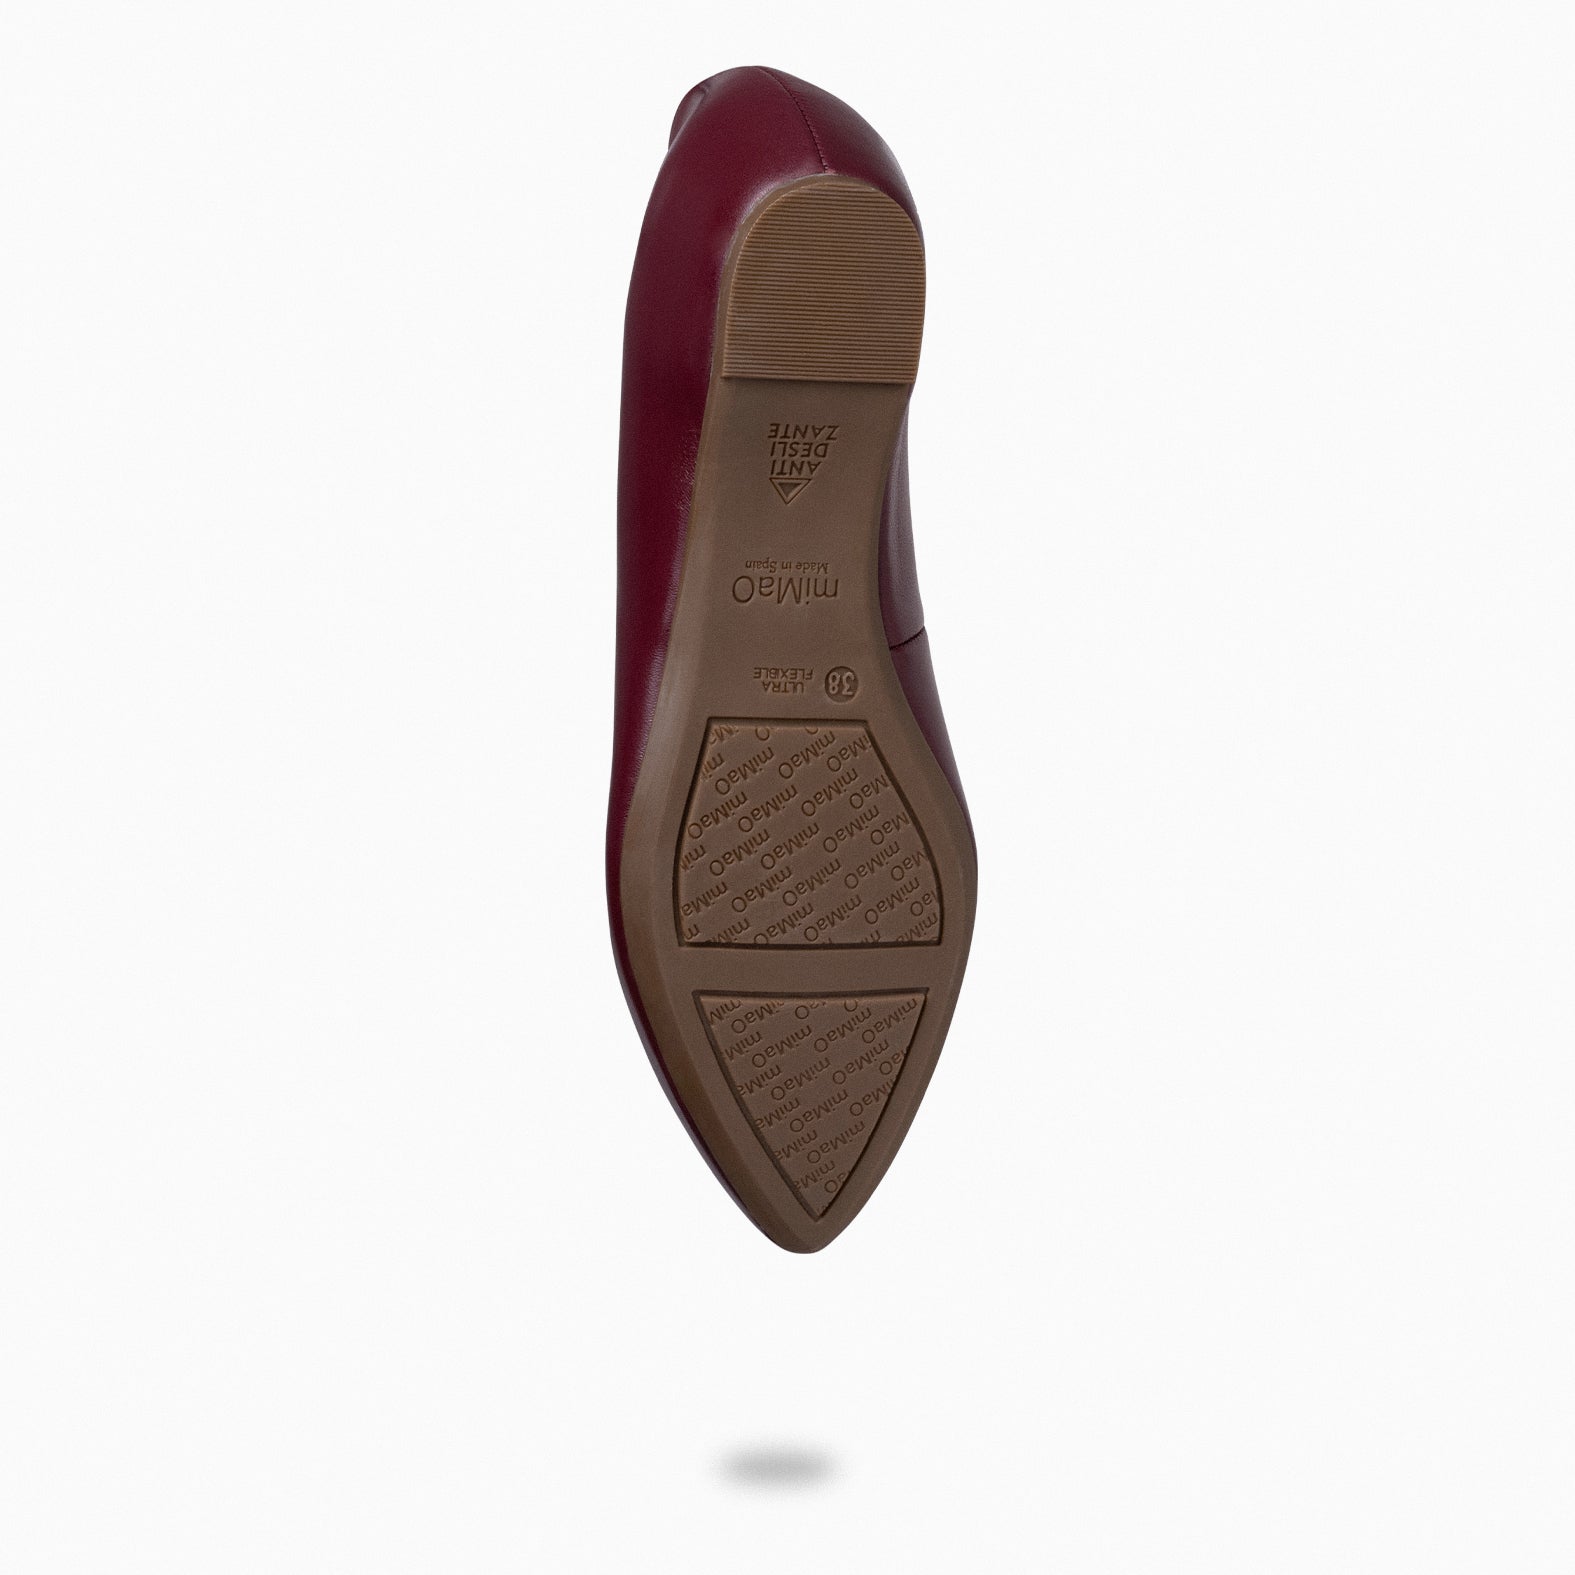 URBAN WEDGE - BURGUNDY shoes with hidden wedge 